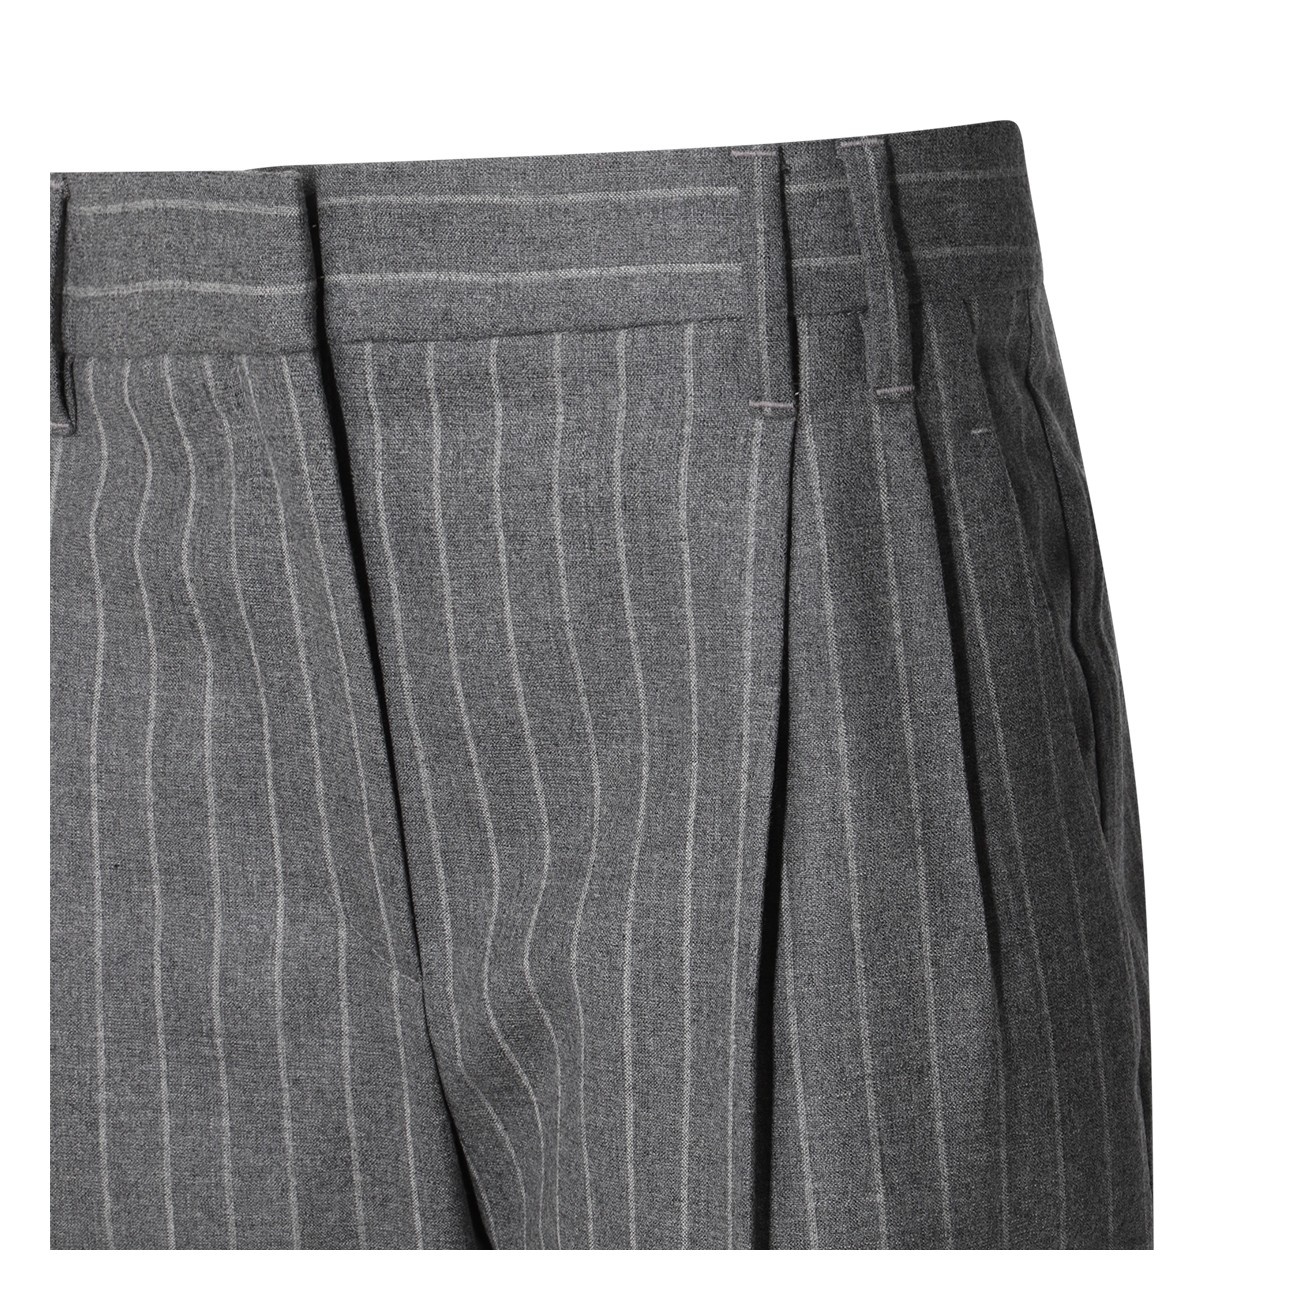 grey wool pants - 3